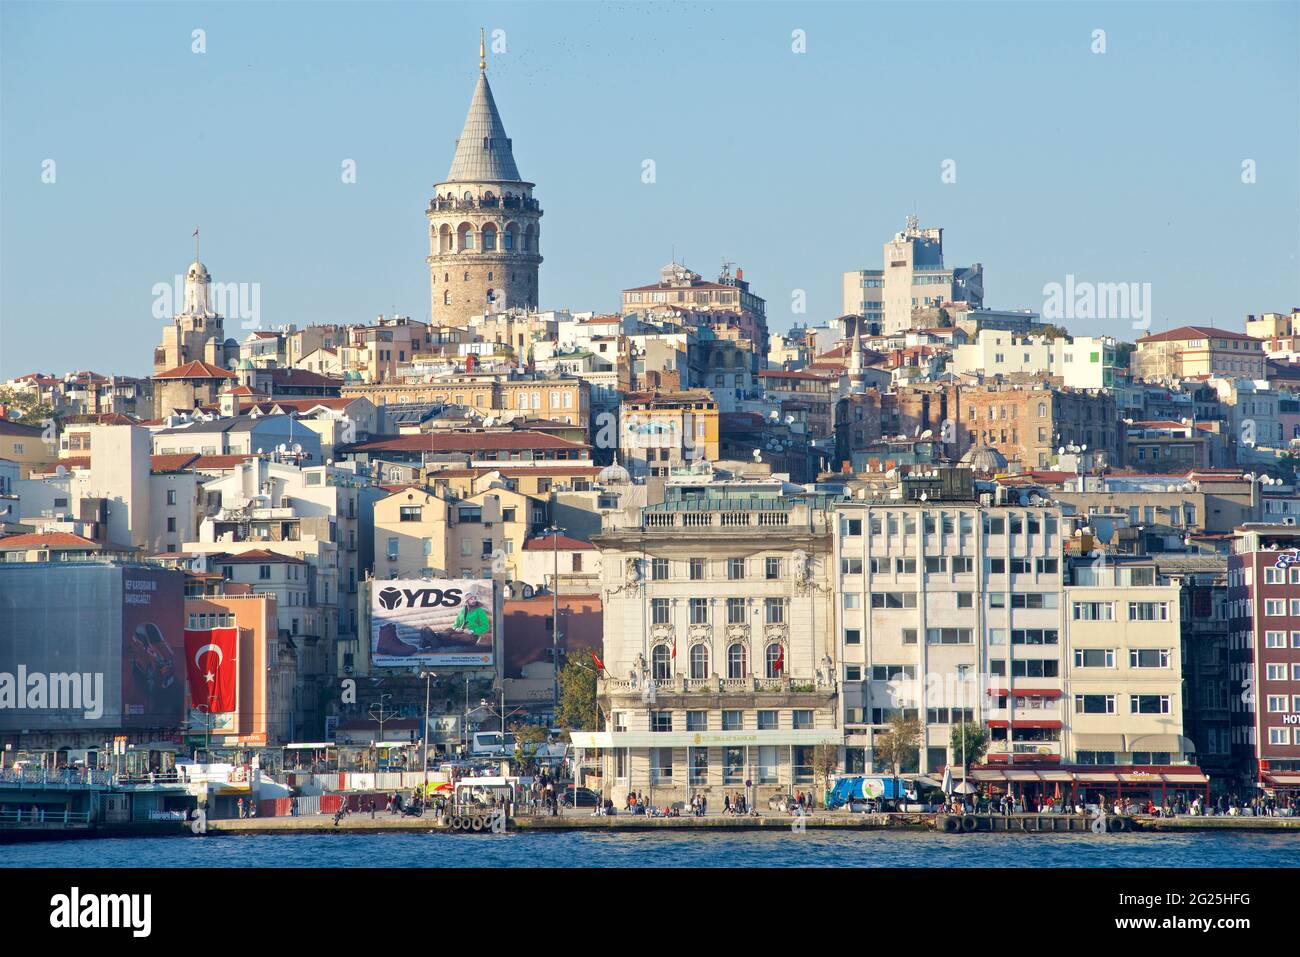 The Galata Tower, Galata Kulesi, Beyoglu district  across the Golden Horn waterway, Istanbul, Turkey Stock Photo